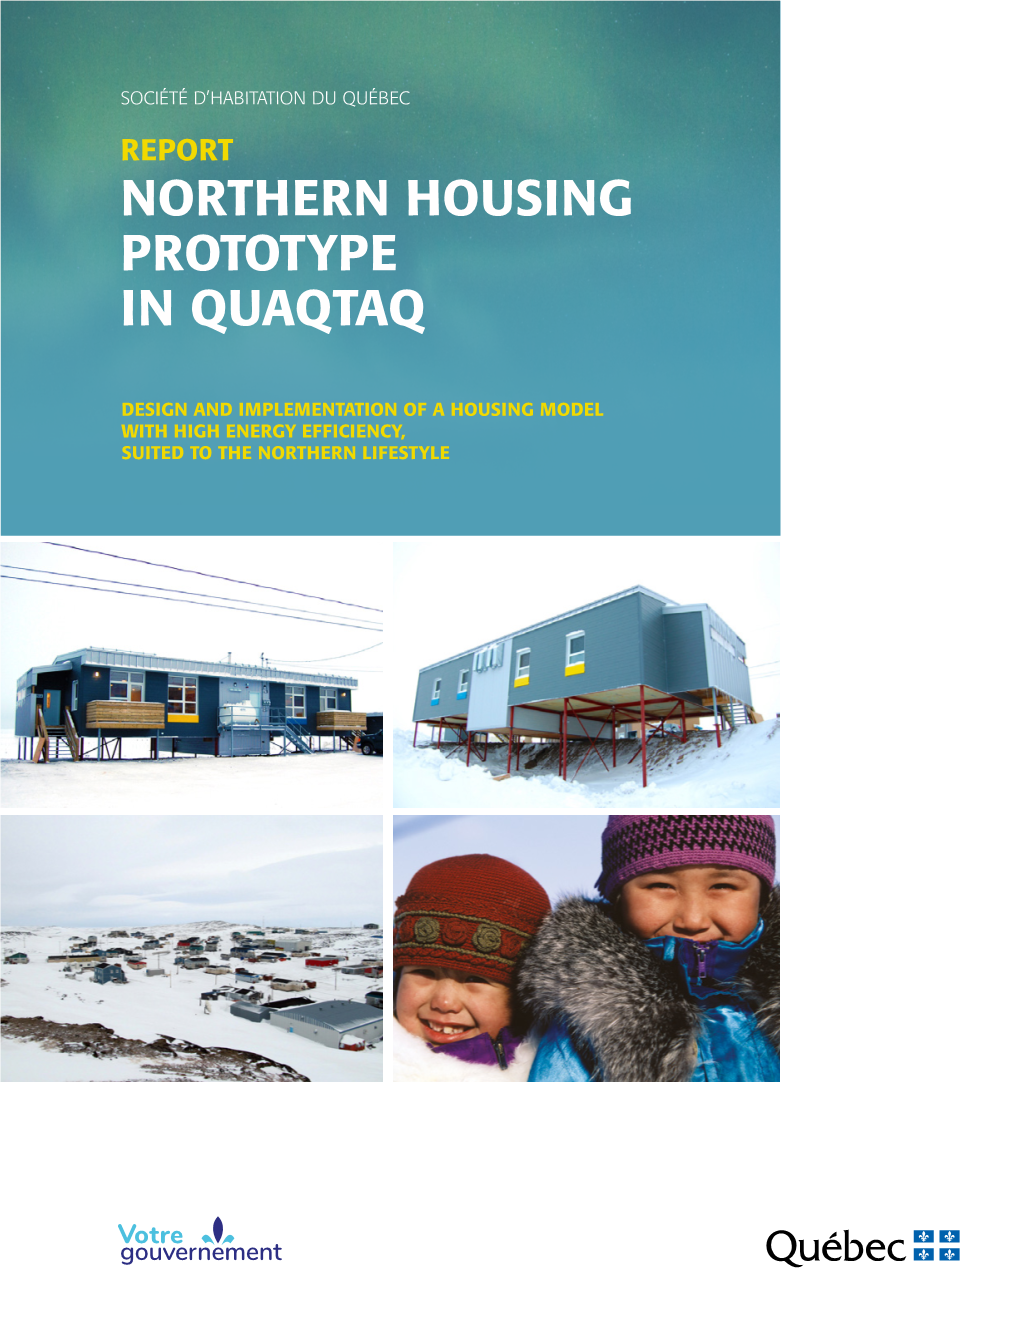 Northern Housing Prototype in Quaqtaq